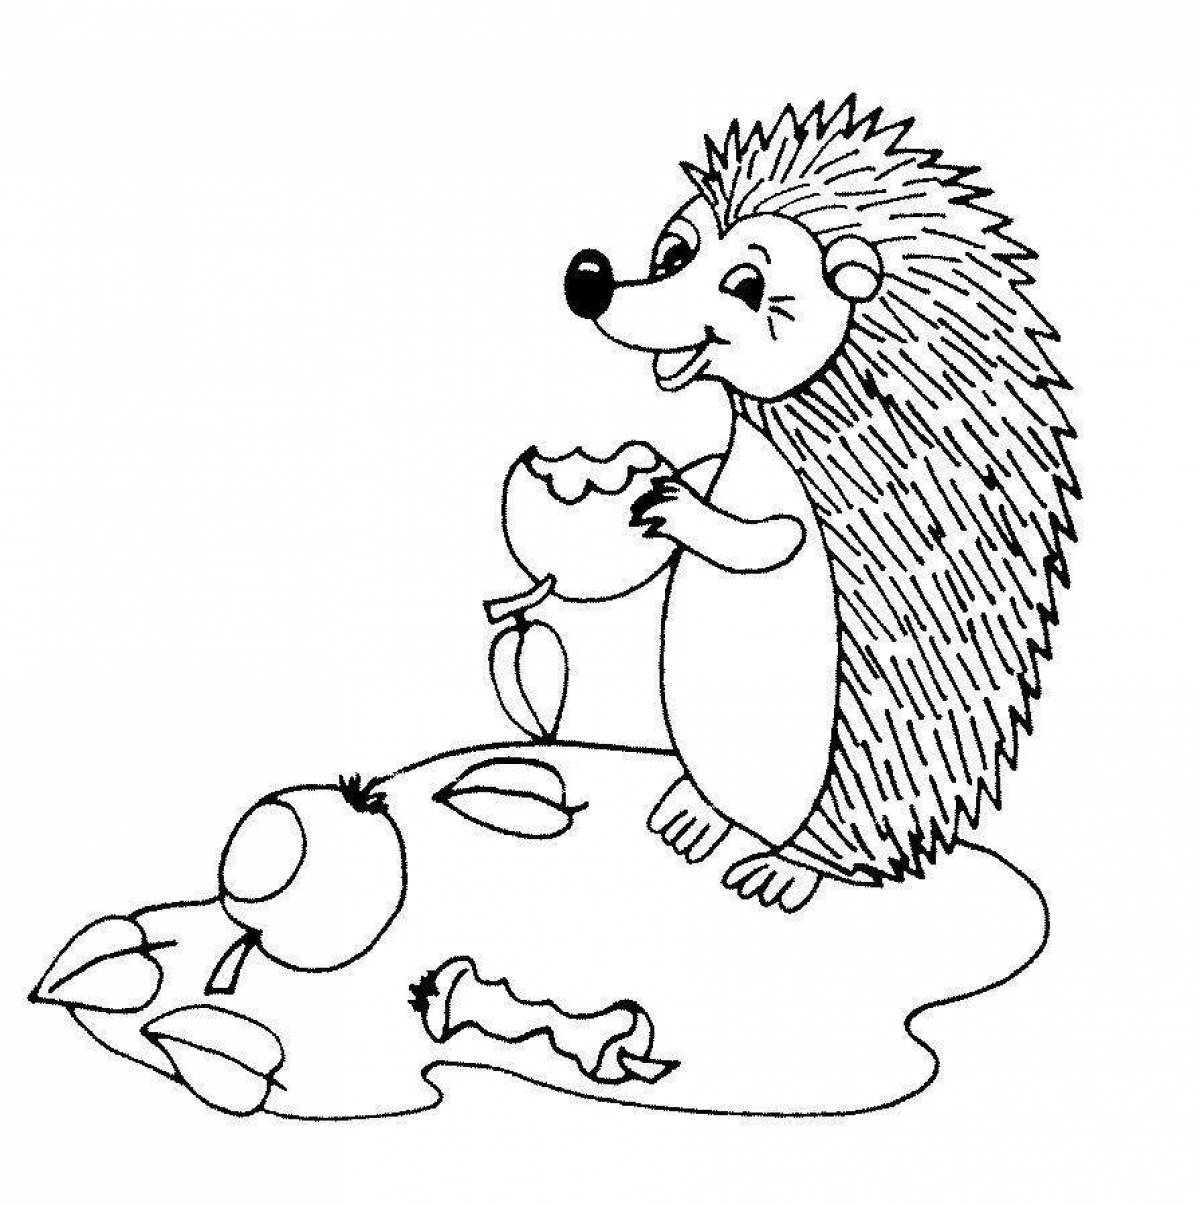 Funny hedgehog coloring book for preschoolers